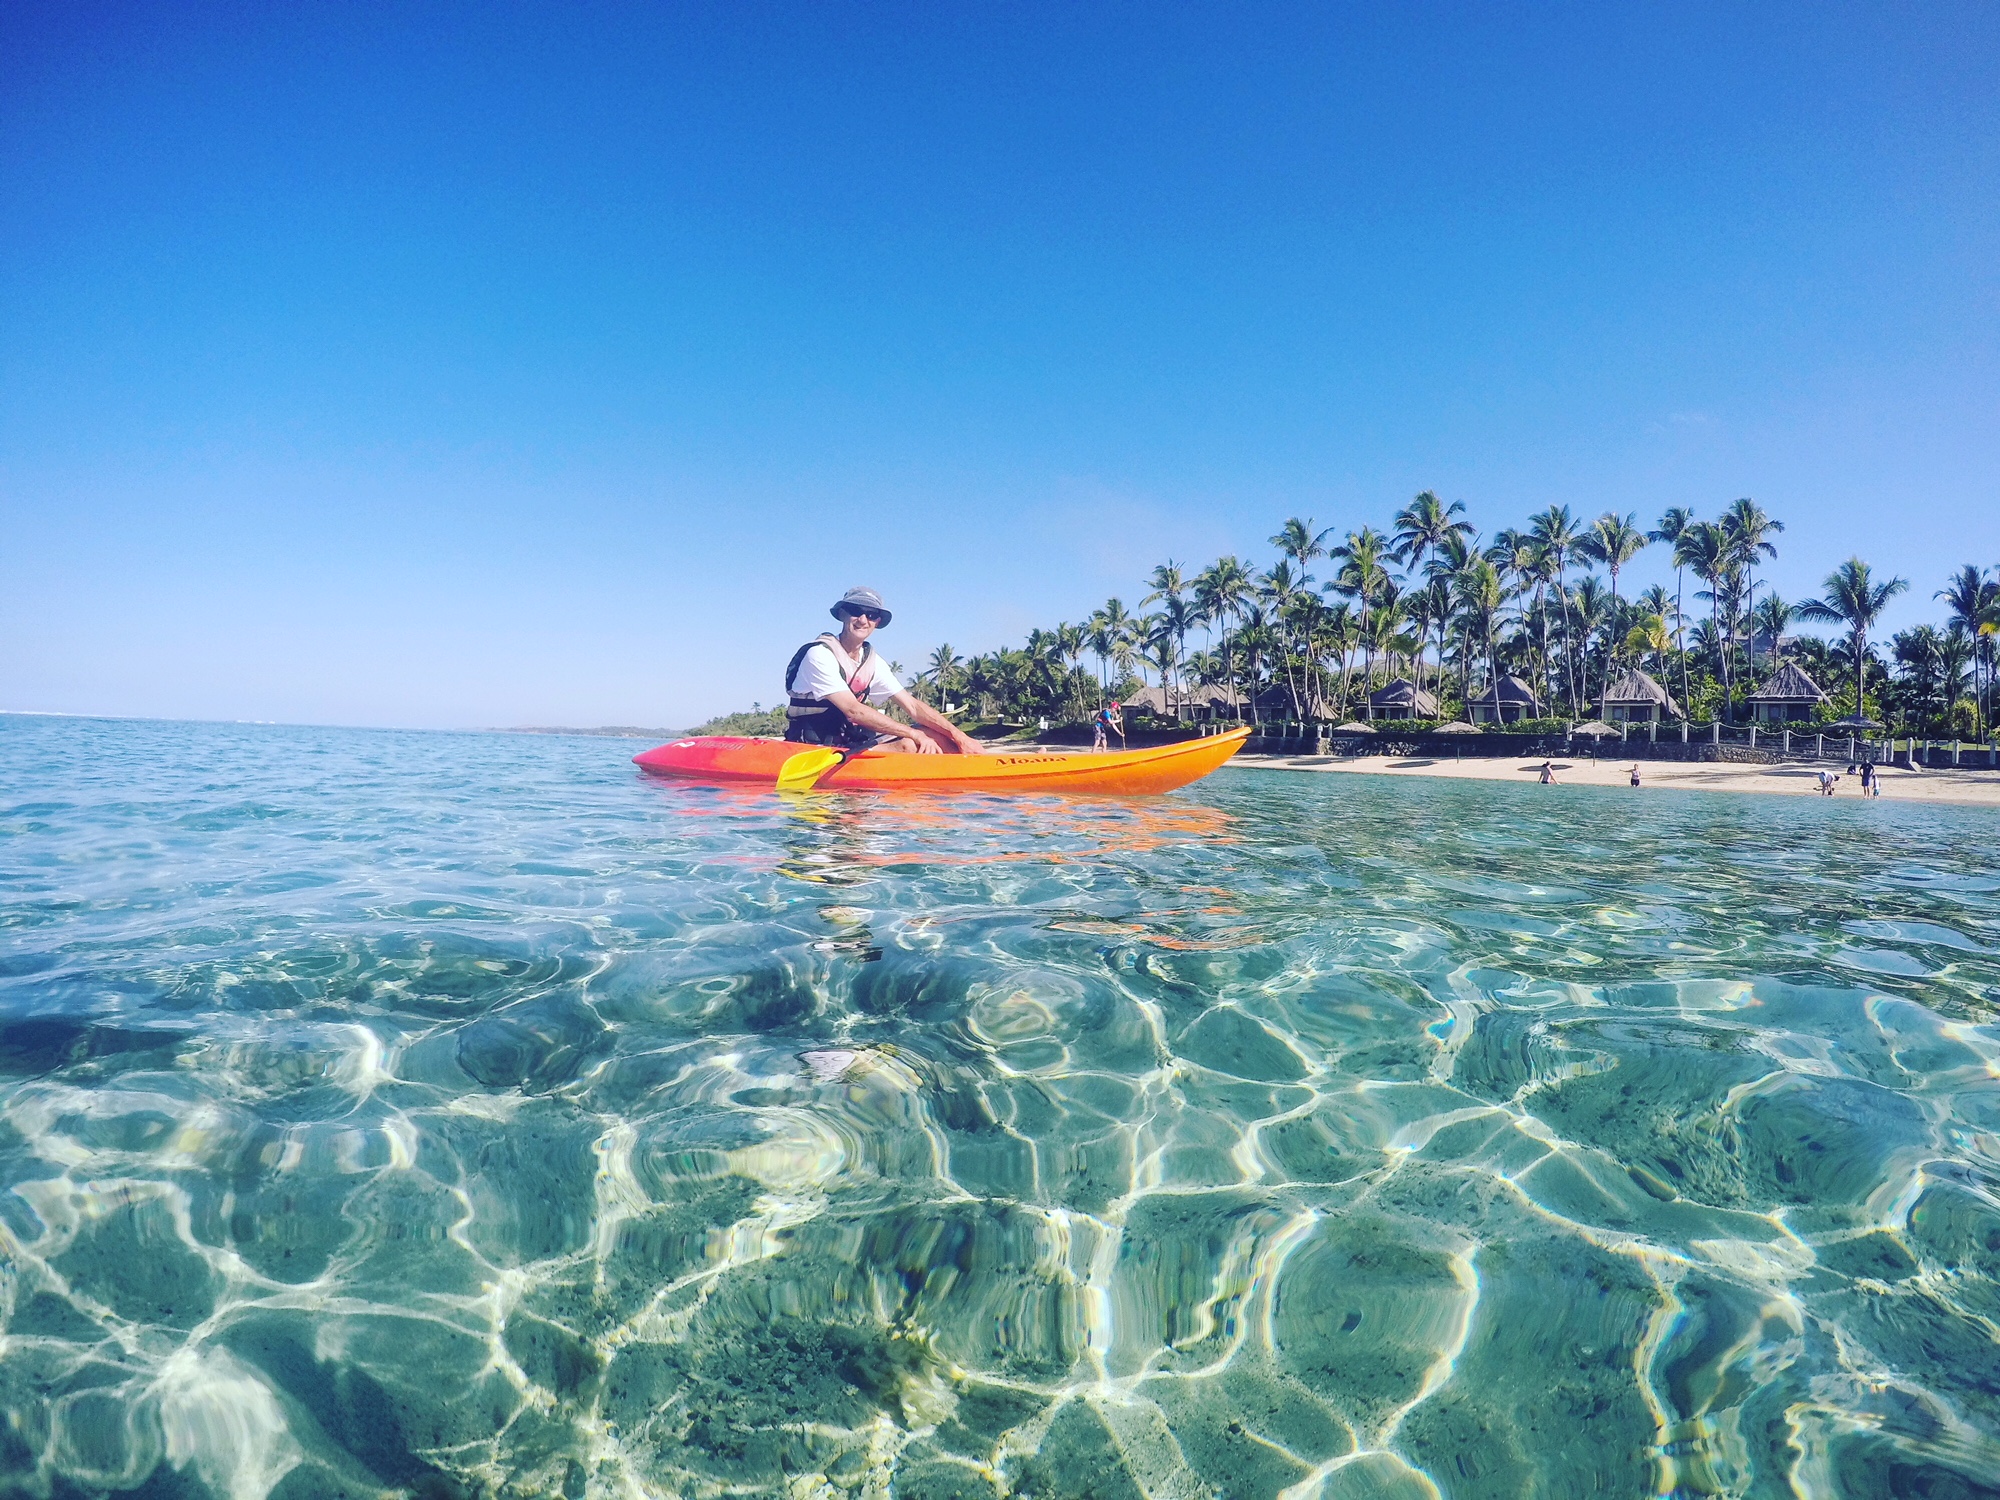 Fiji's clear waters